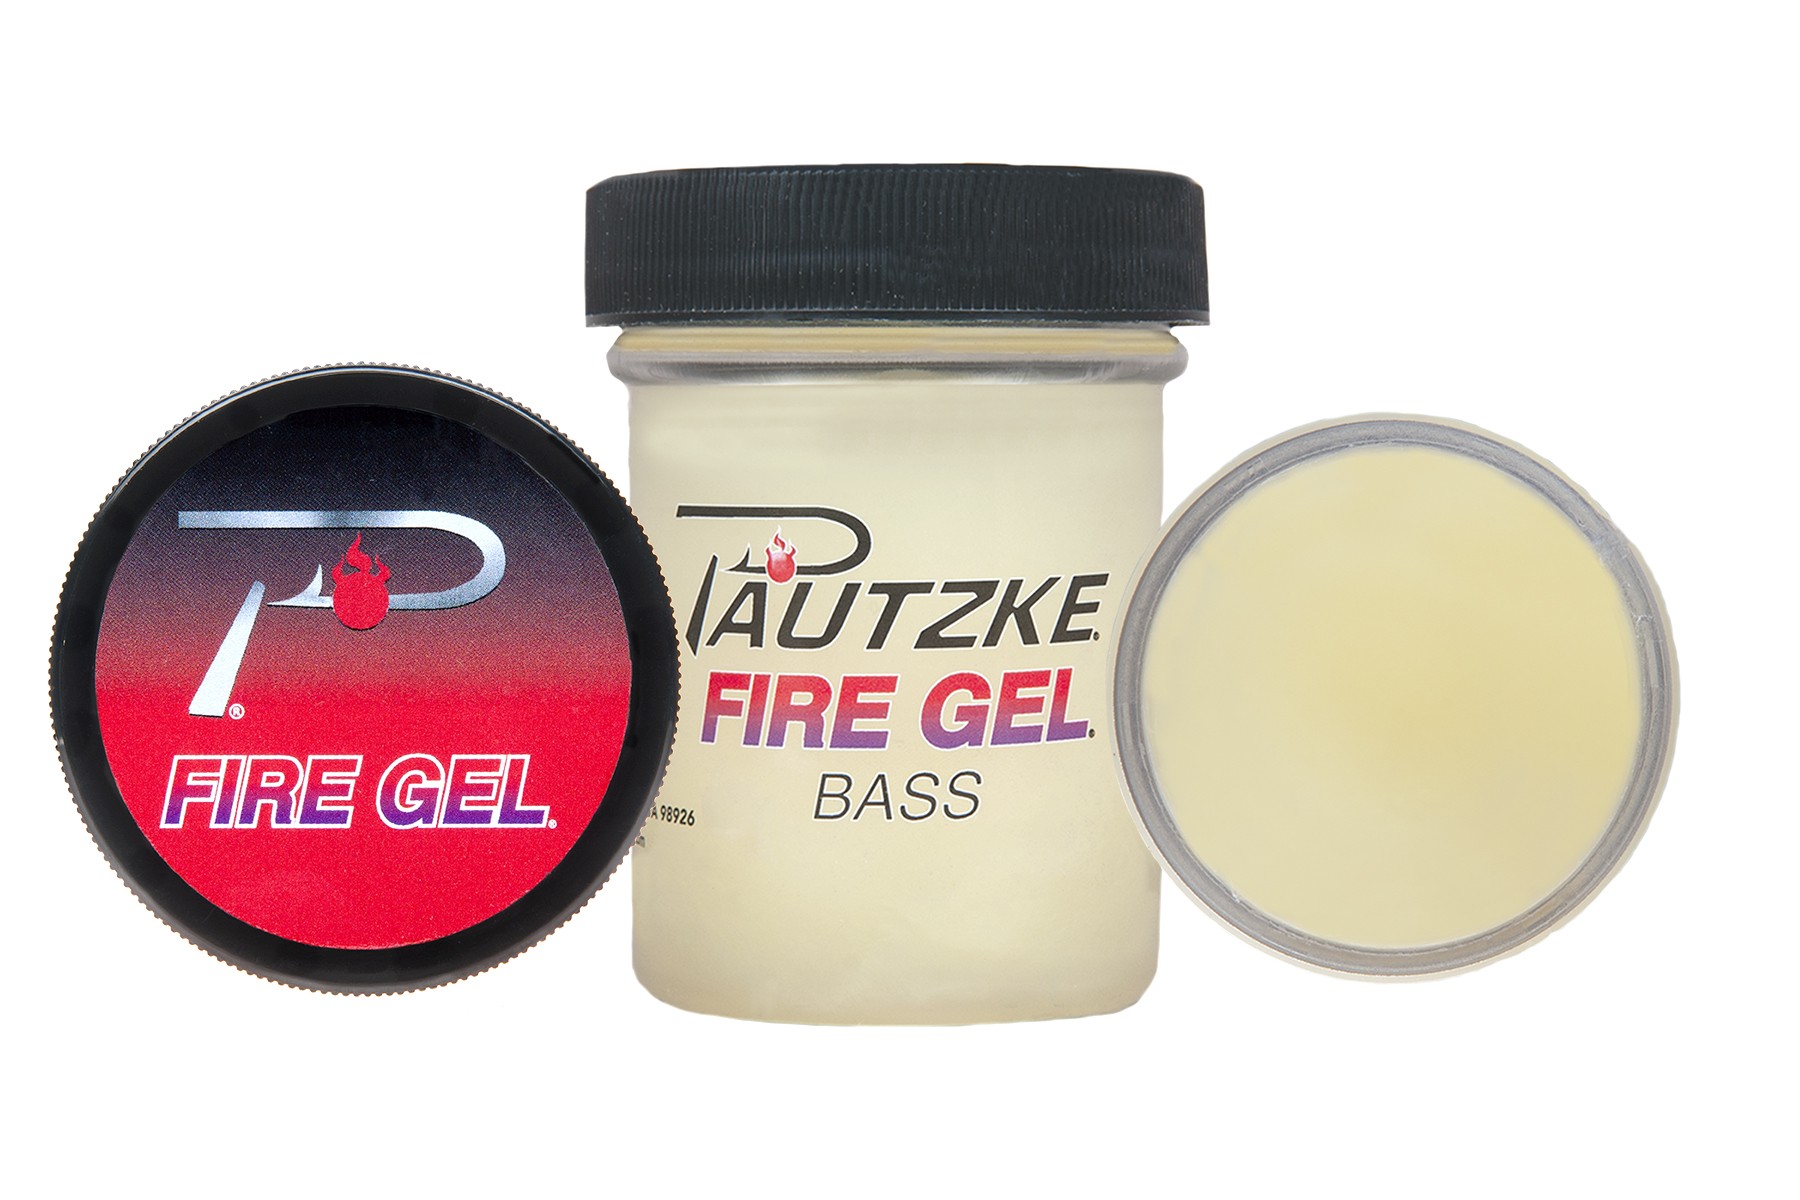 Pautzke Bait Co. Fire Gel Attractant 1.65 oz Freshwater & Saltwater - 20  Scents